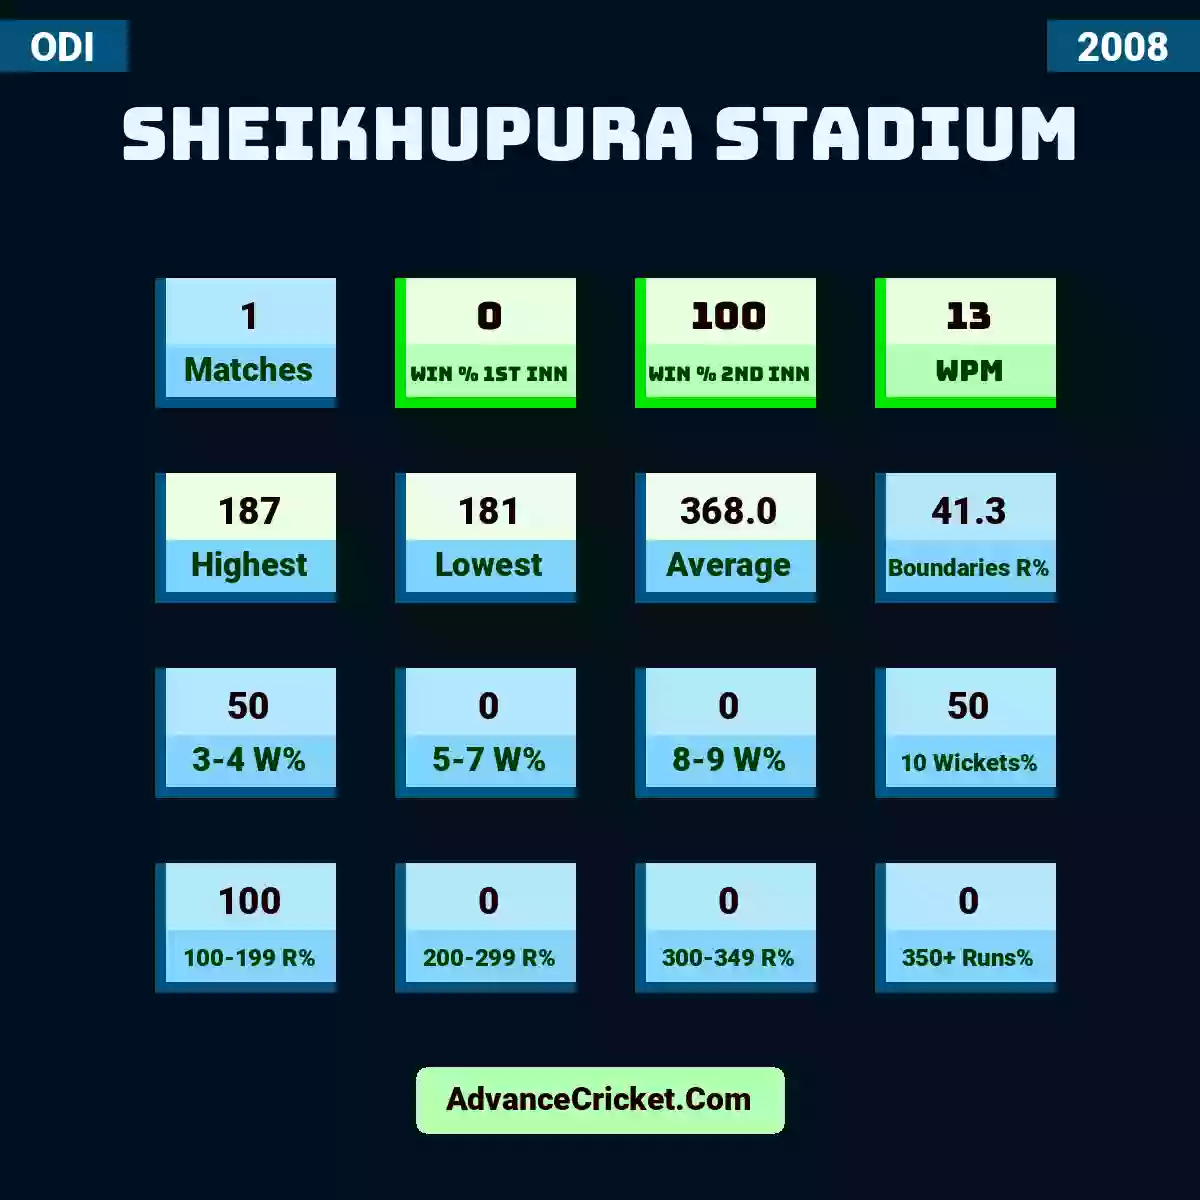 Image showing Sheikhupura Stadium with Matches: 1, Win % 1st Inn: 0, Win % 2nd Inn: 100, WPM: 13, Highest: 187, Lowest: 181, Average: 368.0, Boundaries R%: 41.3, 3-4 W%: 50, 5-7 W%: 0, 8-9 W%: 0, 10 Wickets%: 50, 100-199 R%: 100, 200-299 R%: 0, 300-349 R%: 0, 350+ Runs%: 0.